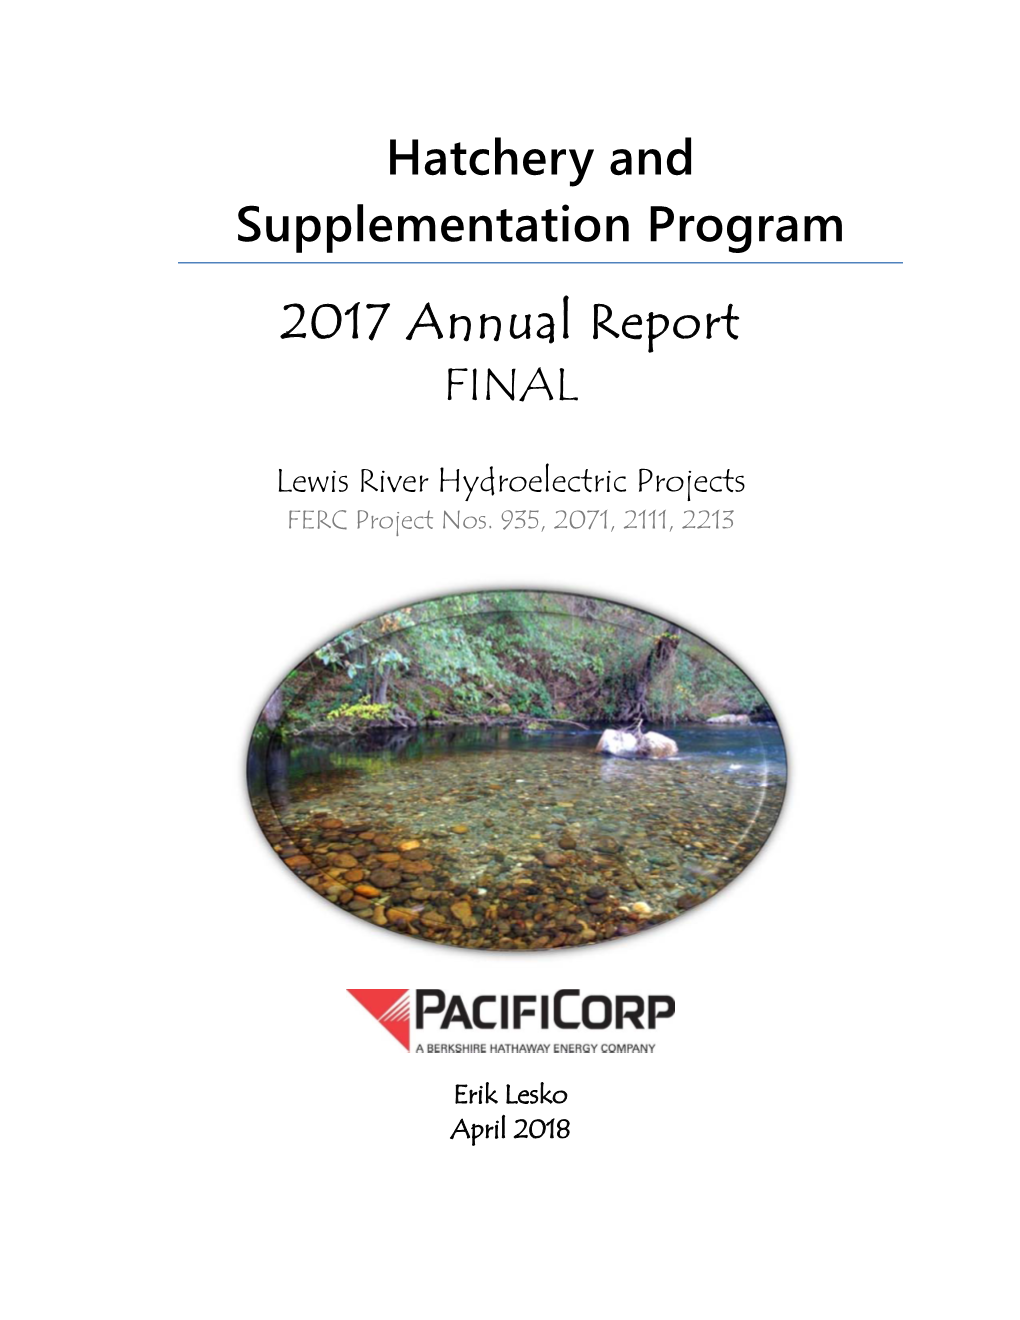 Hatchery and Supplementation Program 2017 Annual Report